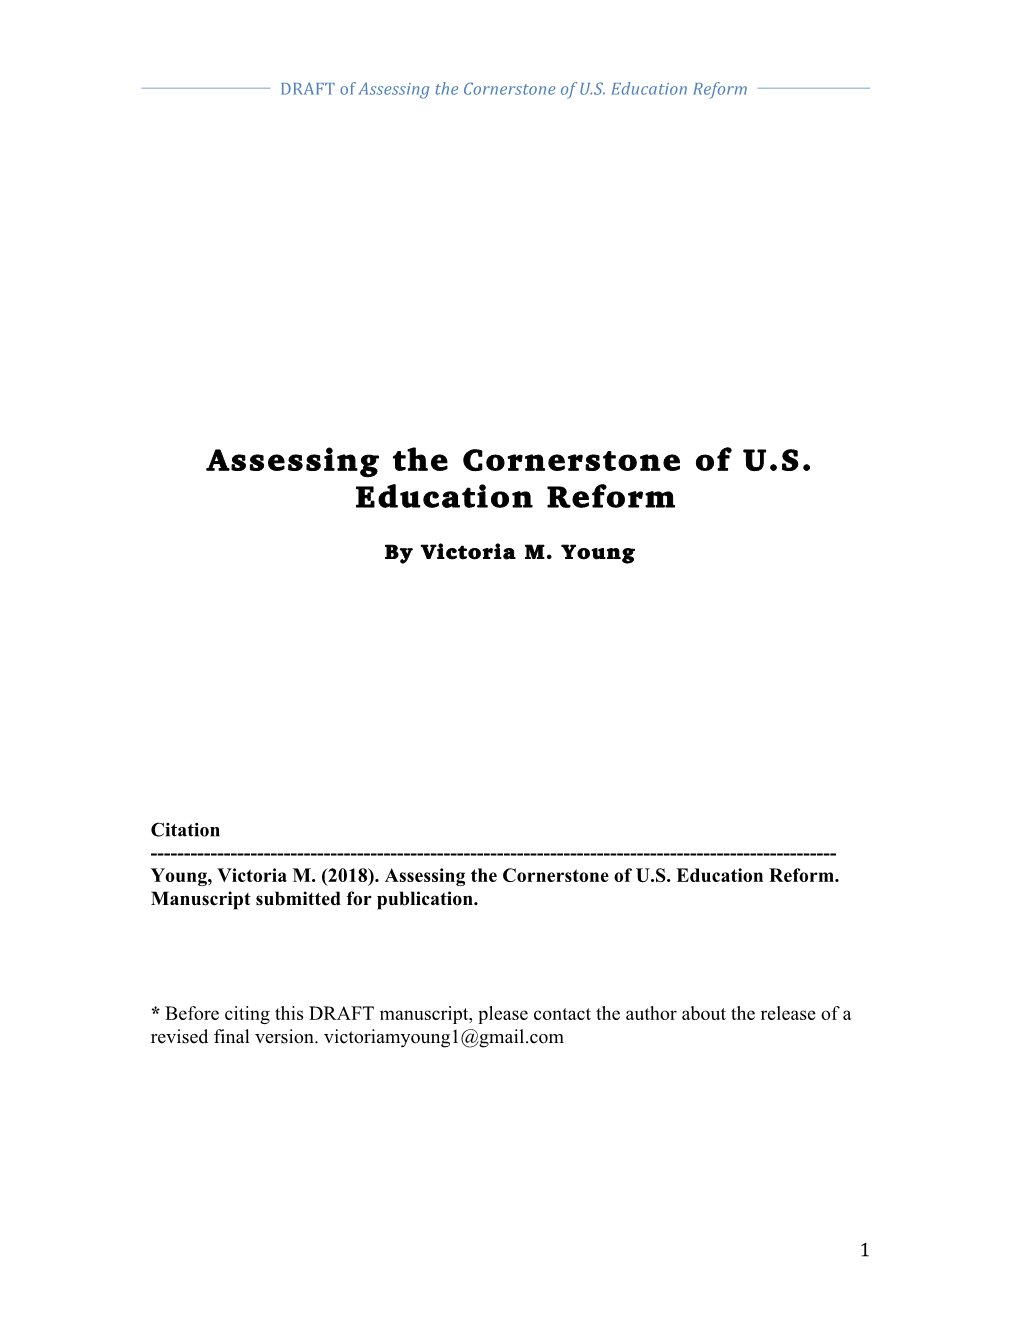 Assessing the Cornerstone of U.S. Education Reform